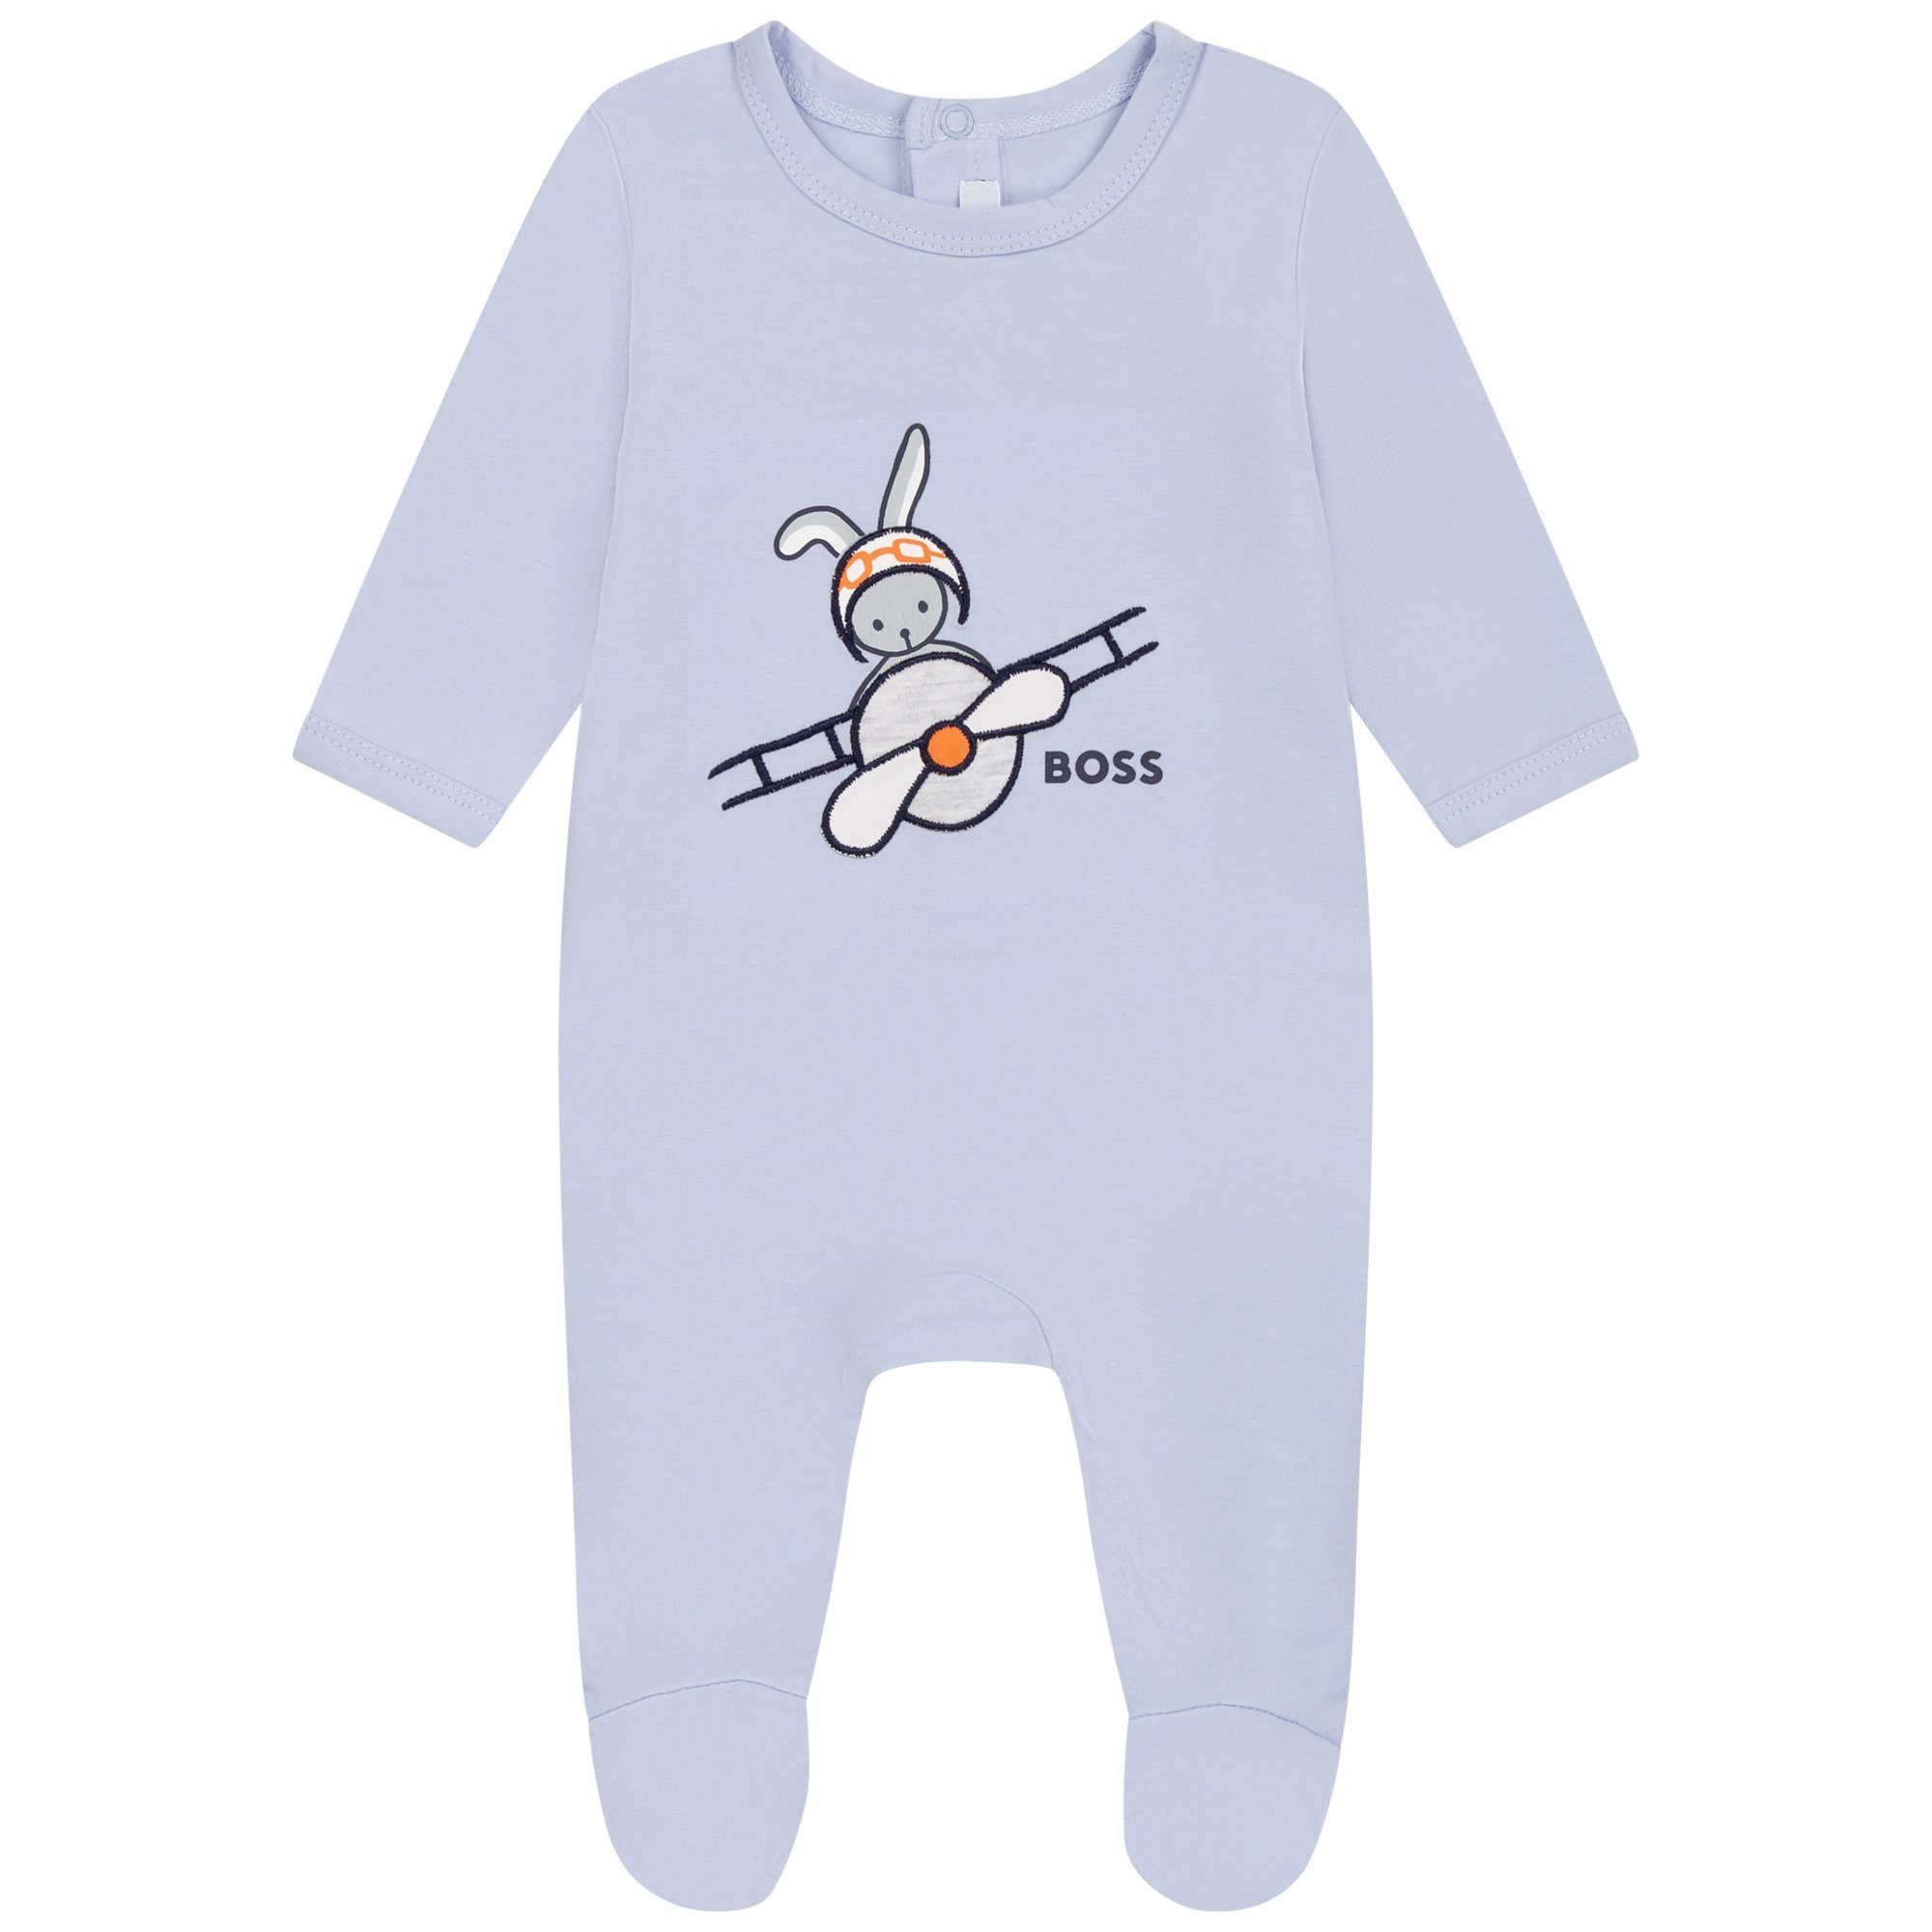 BOSS Strampler BOSS Baby Strampler Bodysuit Pyjama hellblau Hase mit Logo